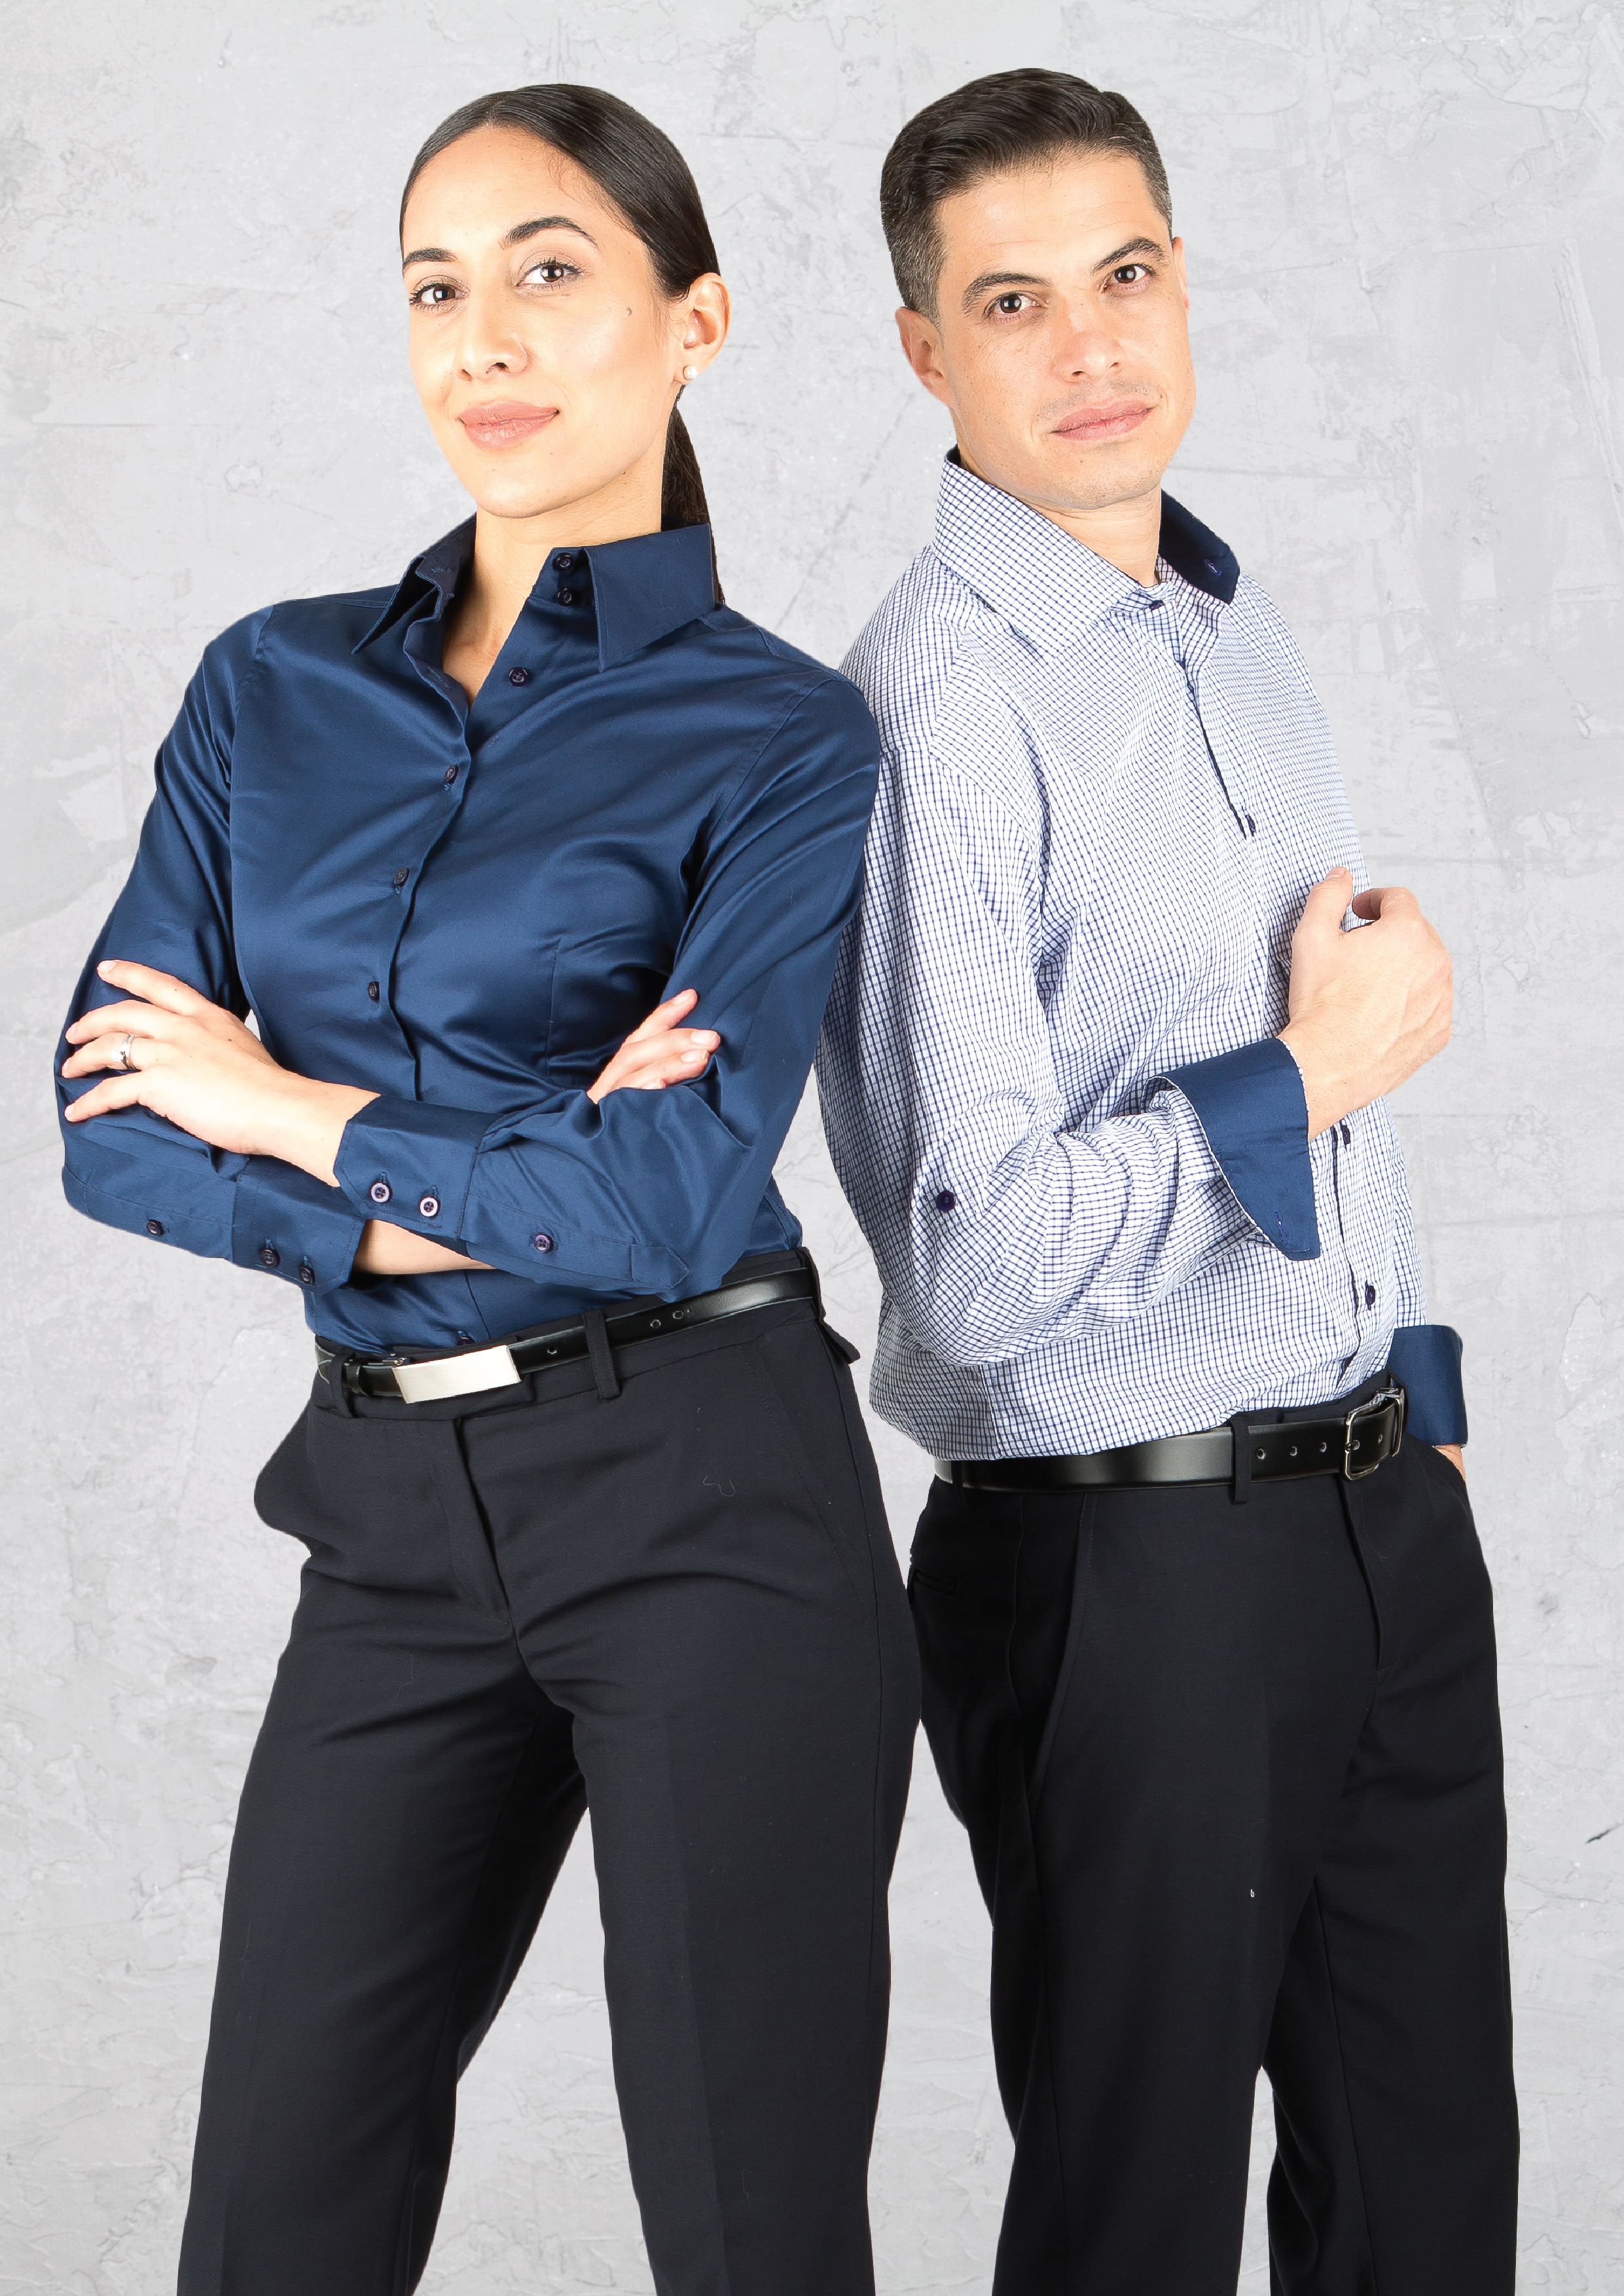 10 Corporate Uniform Looks that Spell Success – The Uniform Edit